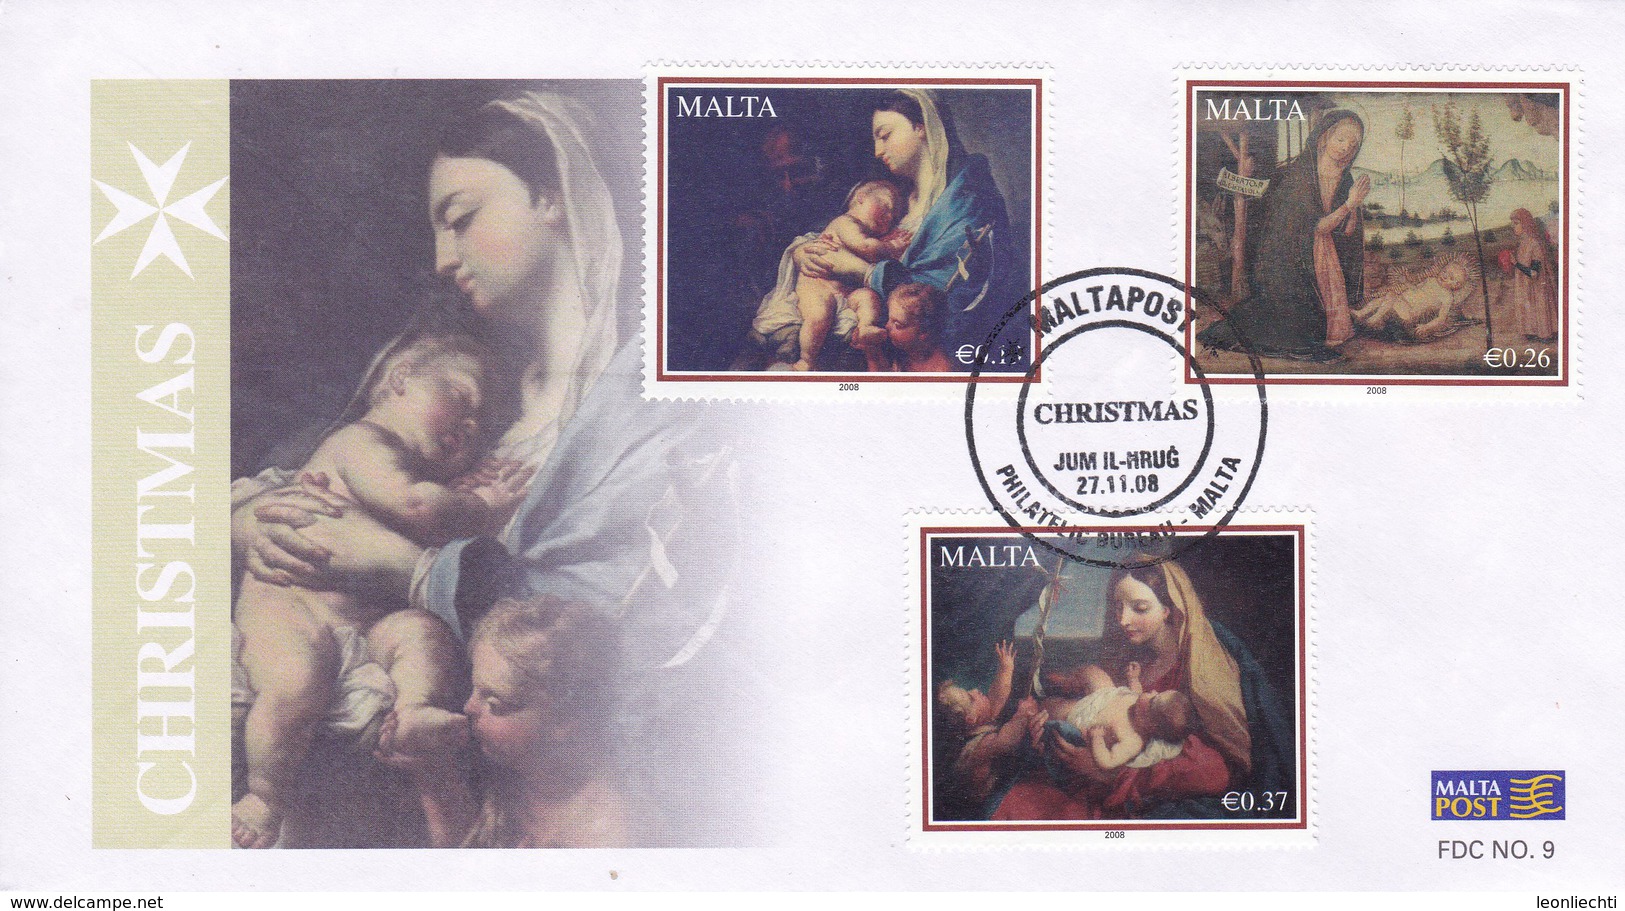 Malta, FDC N°. 9 . 27.11.08. Christmas - Christianity